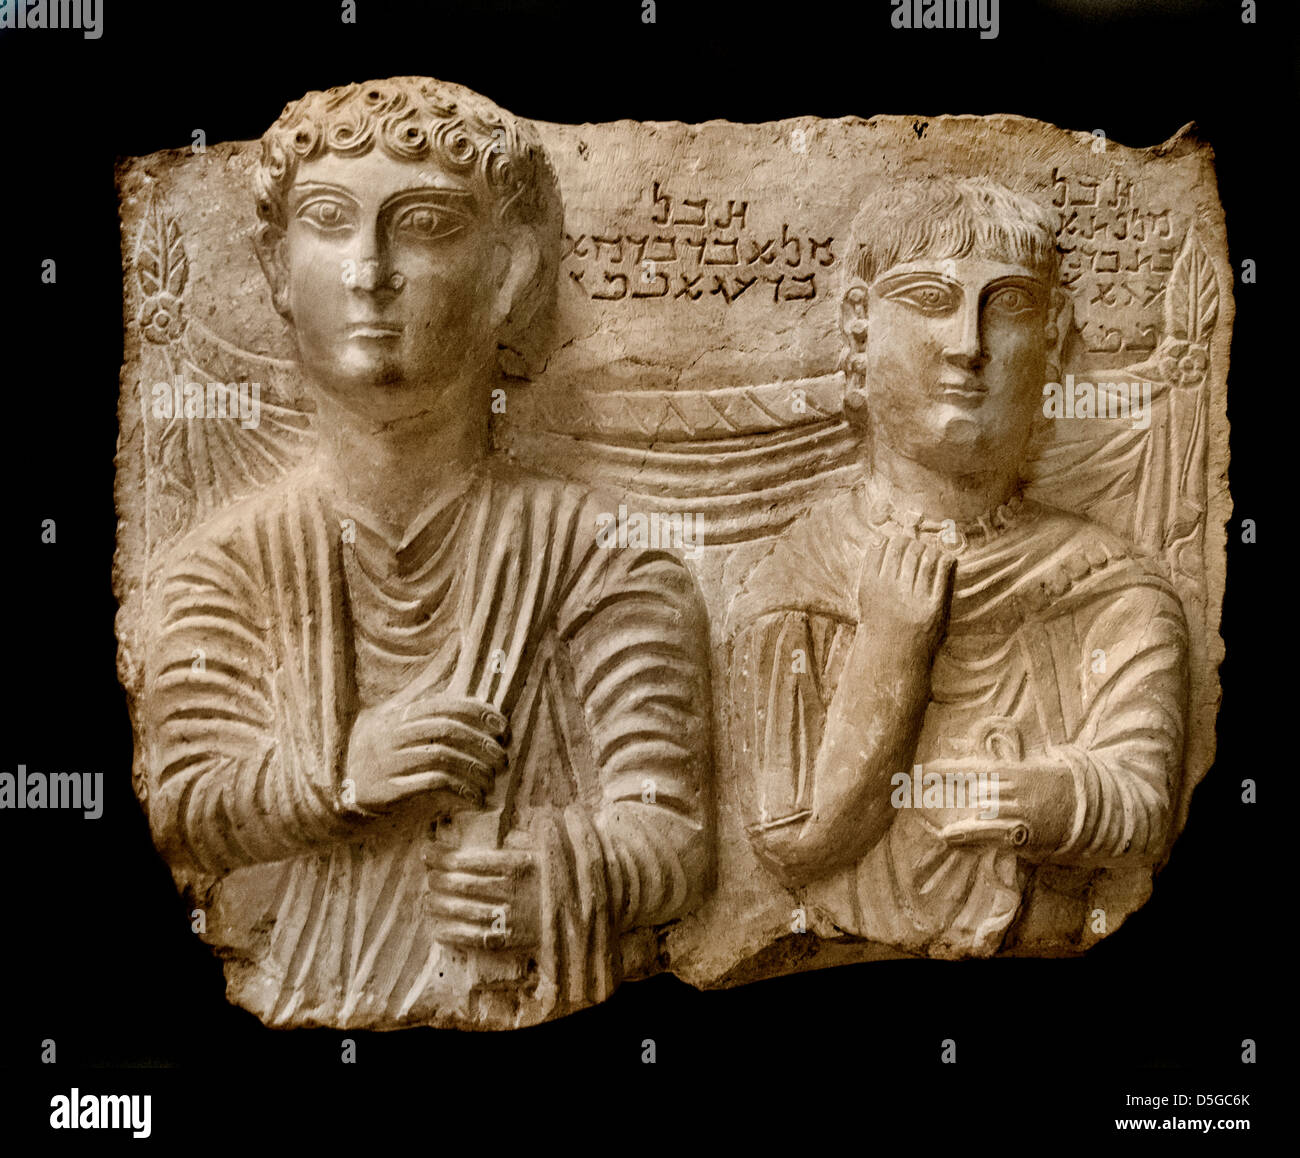 2 100 Musée d'archéologie syrienne Syrie Palmyra Banque D'Images